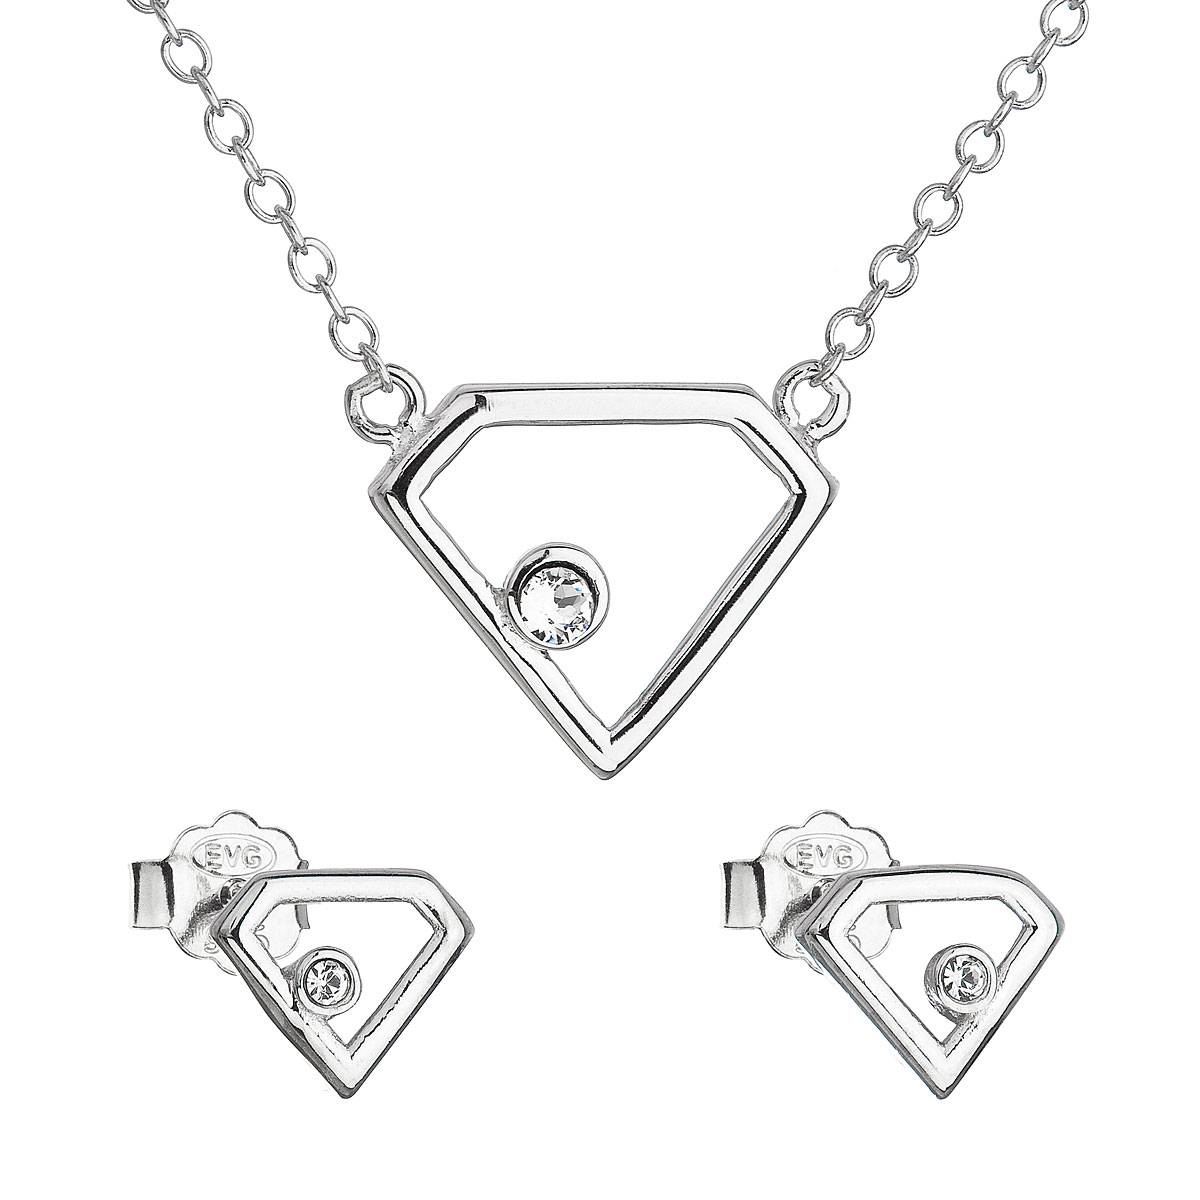 Sada šperkov s kryštálmi Swarovski náušnice a náhrdelník biely trojuholník 39165.1